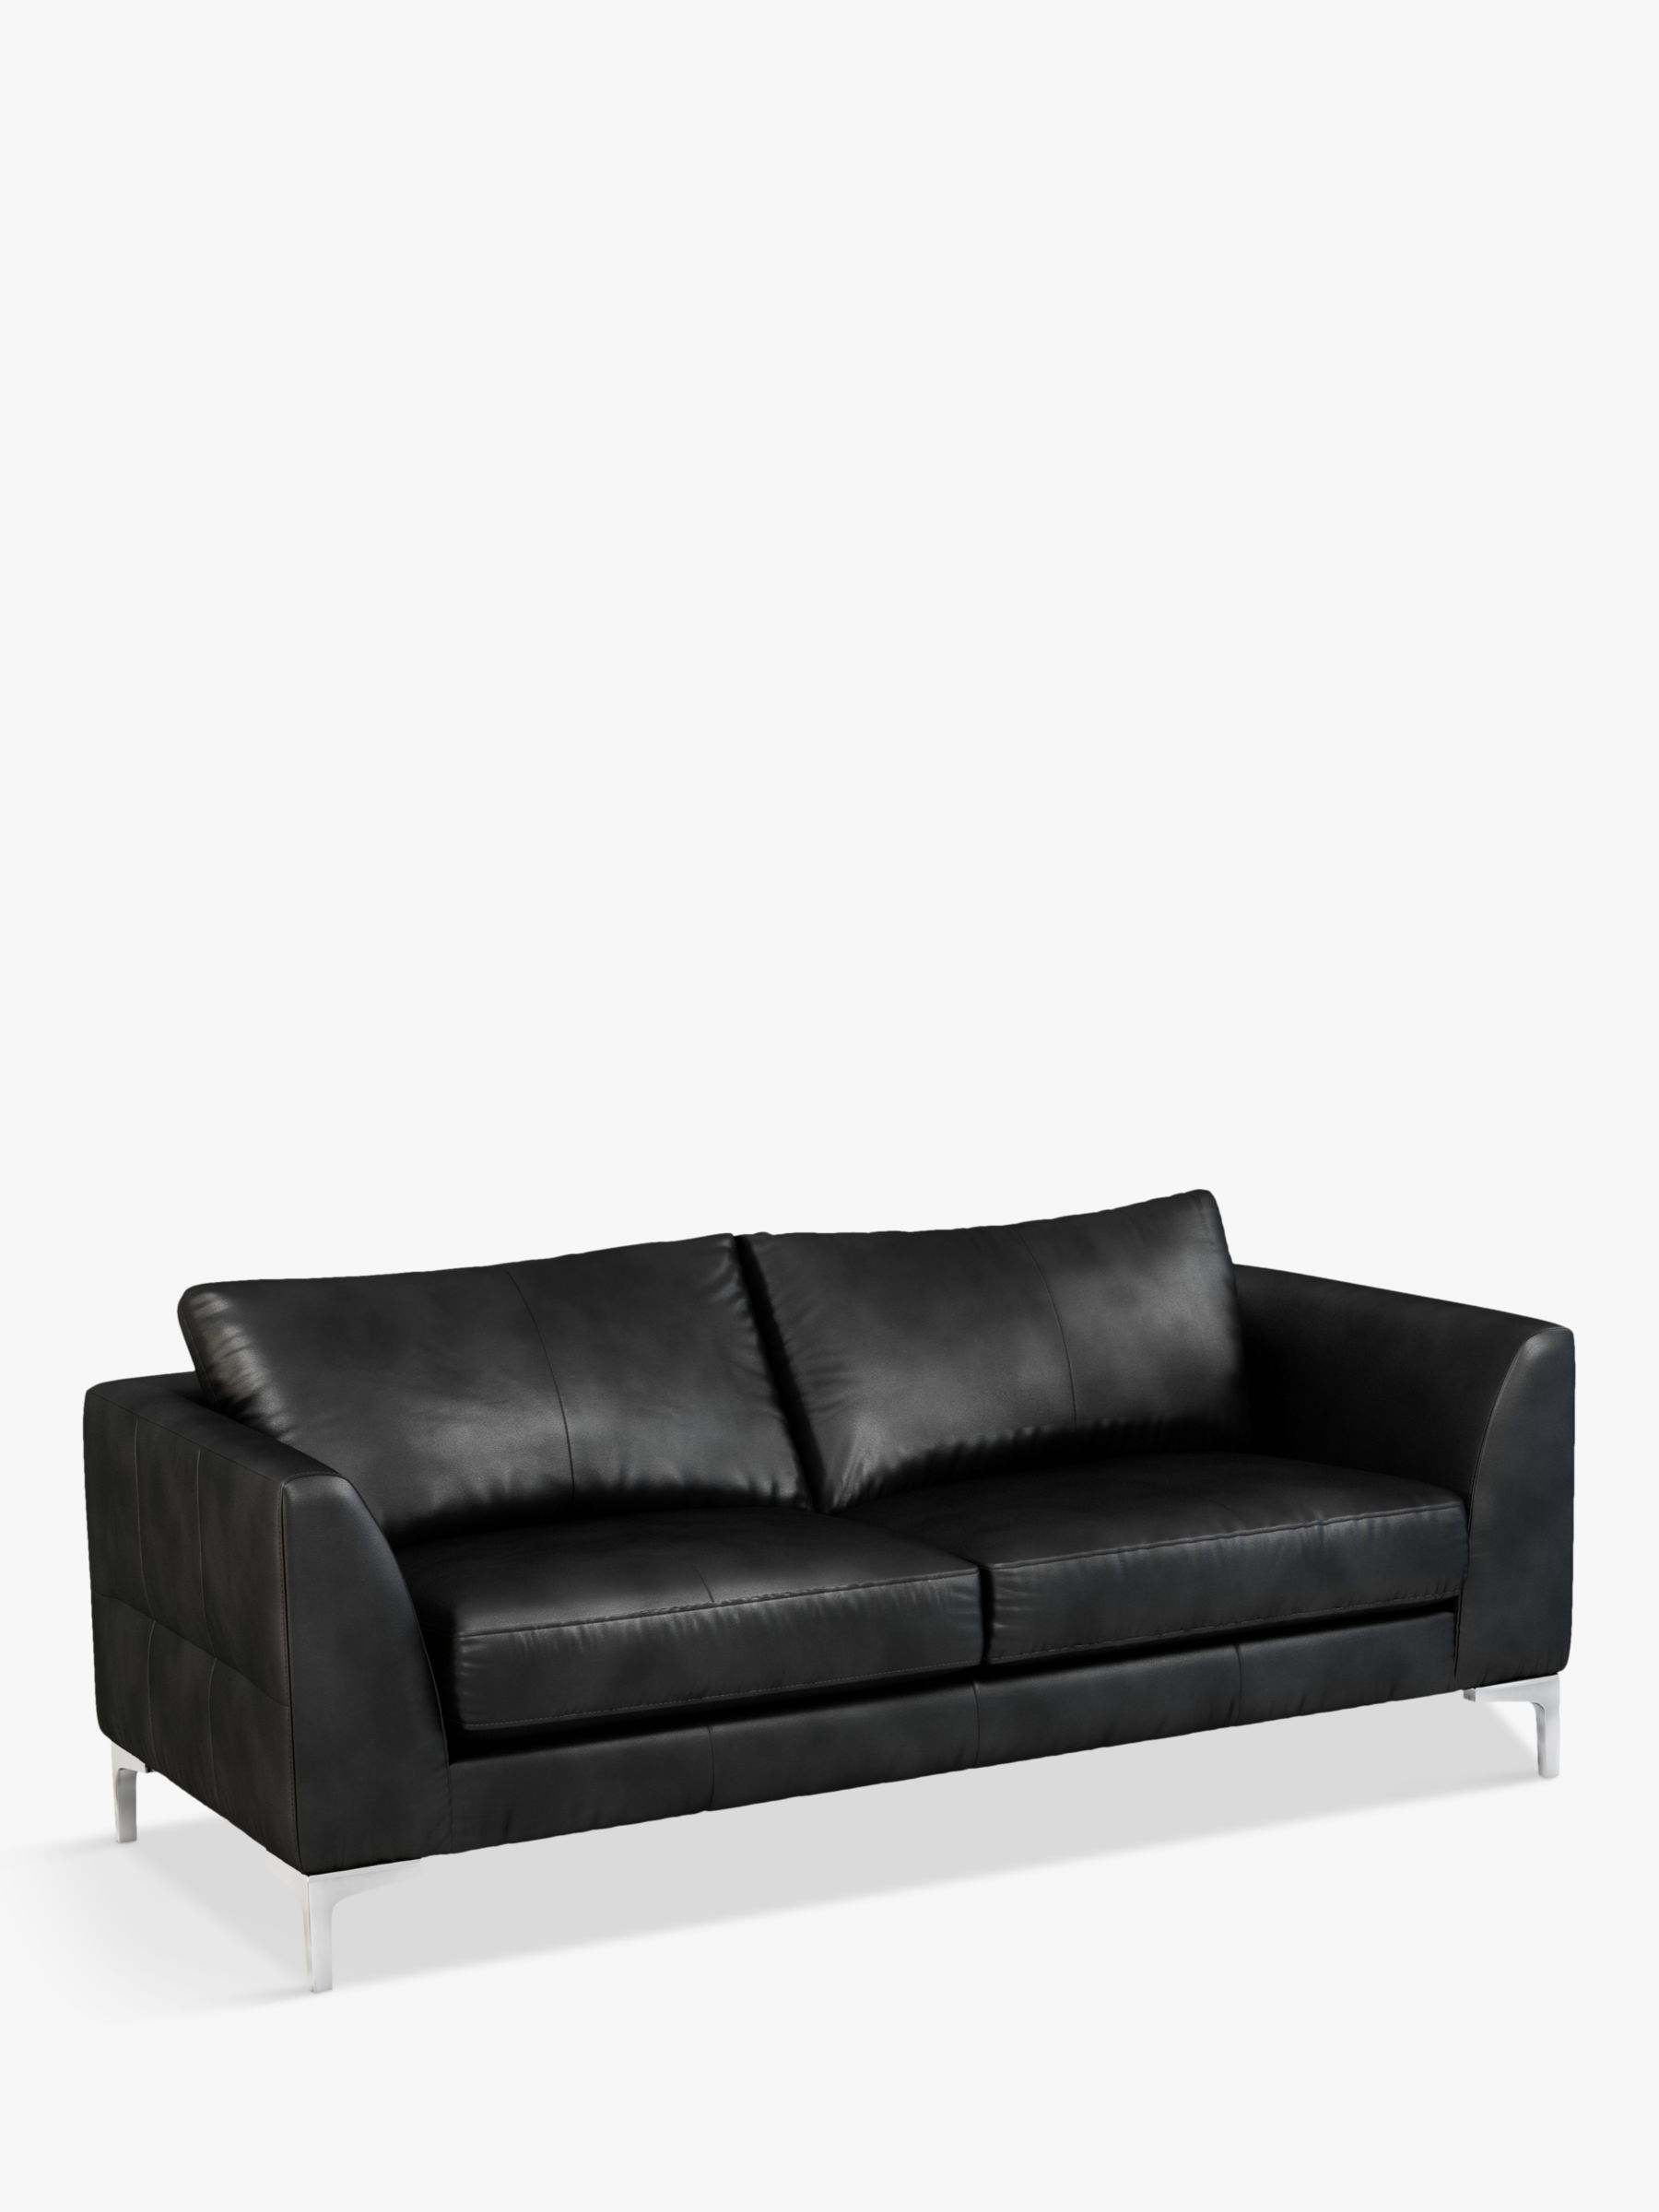 Seater Leather Sofa Metal Leg